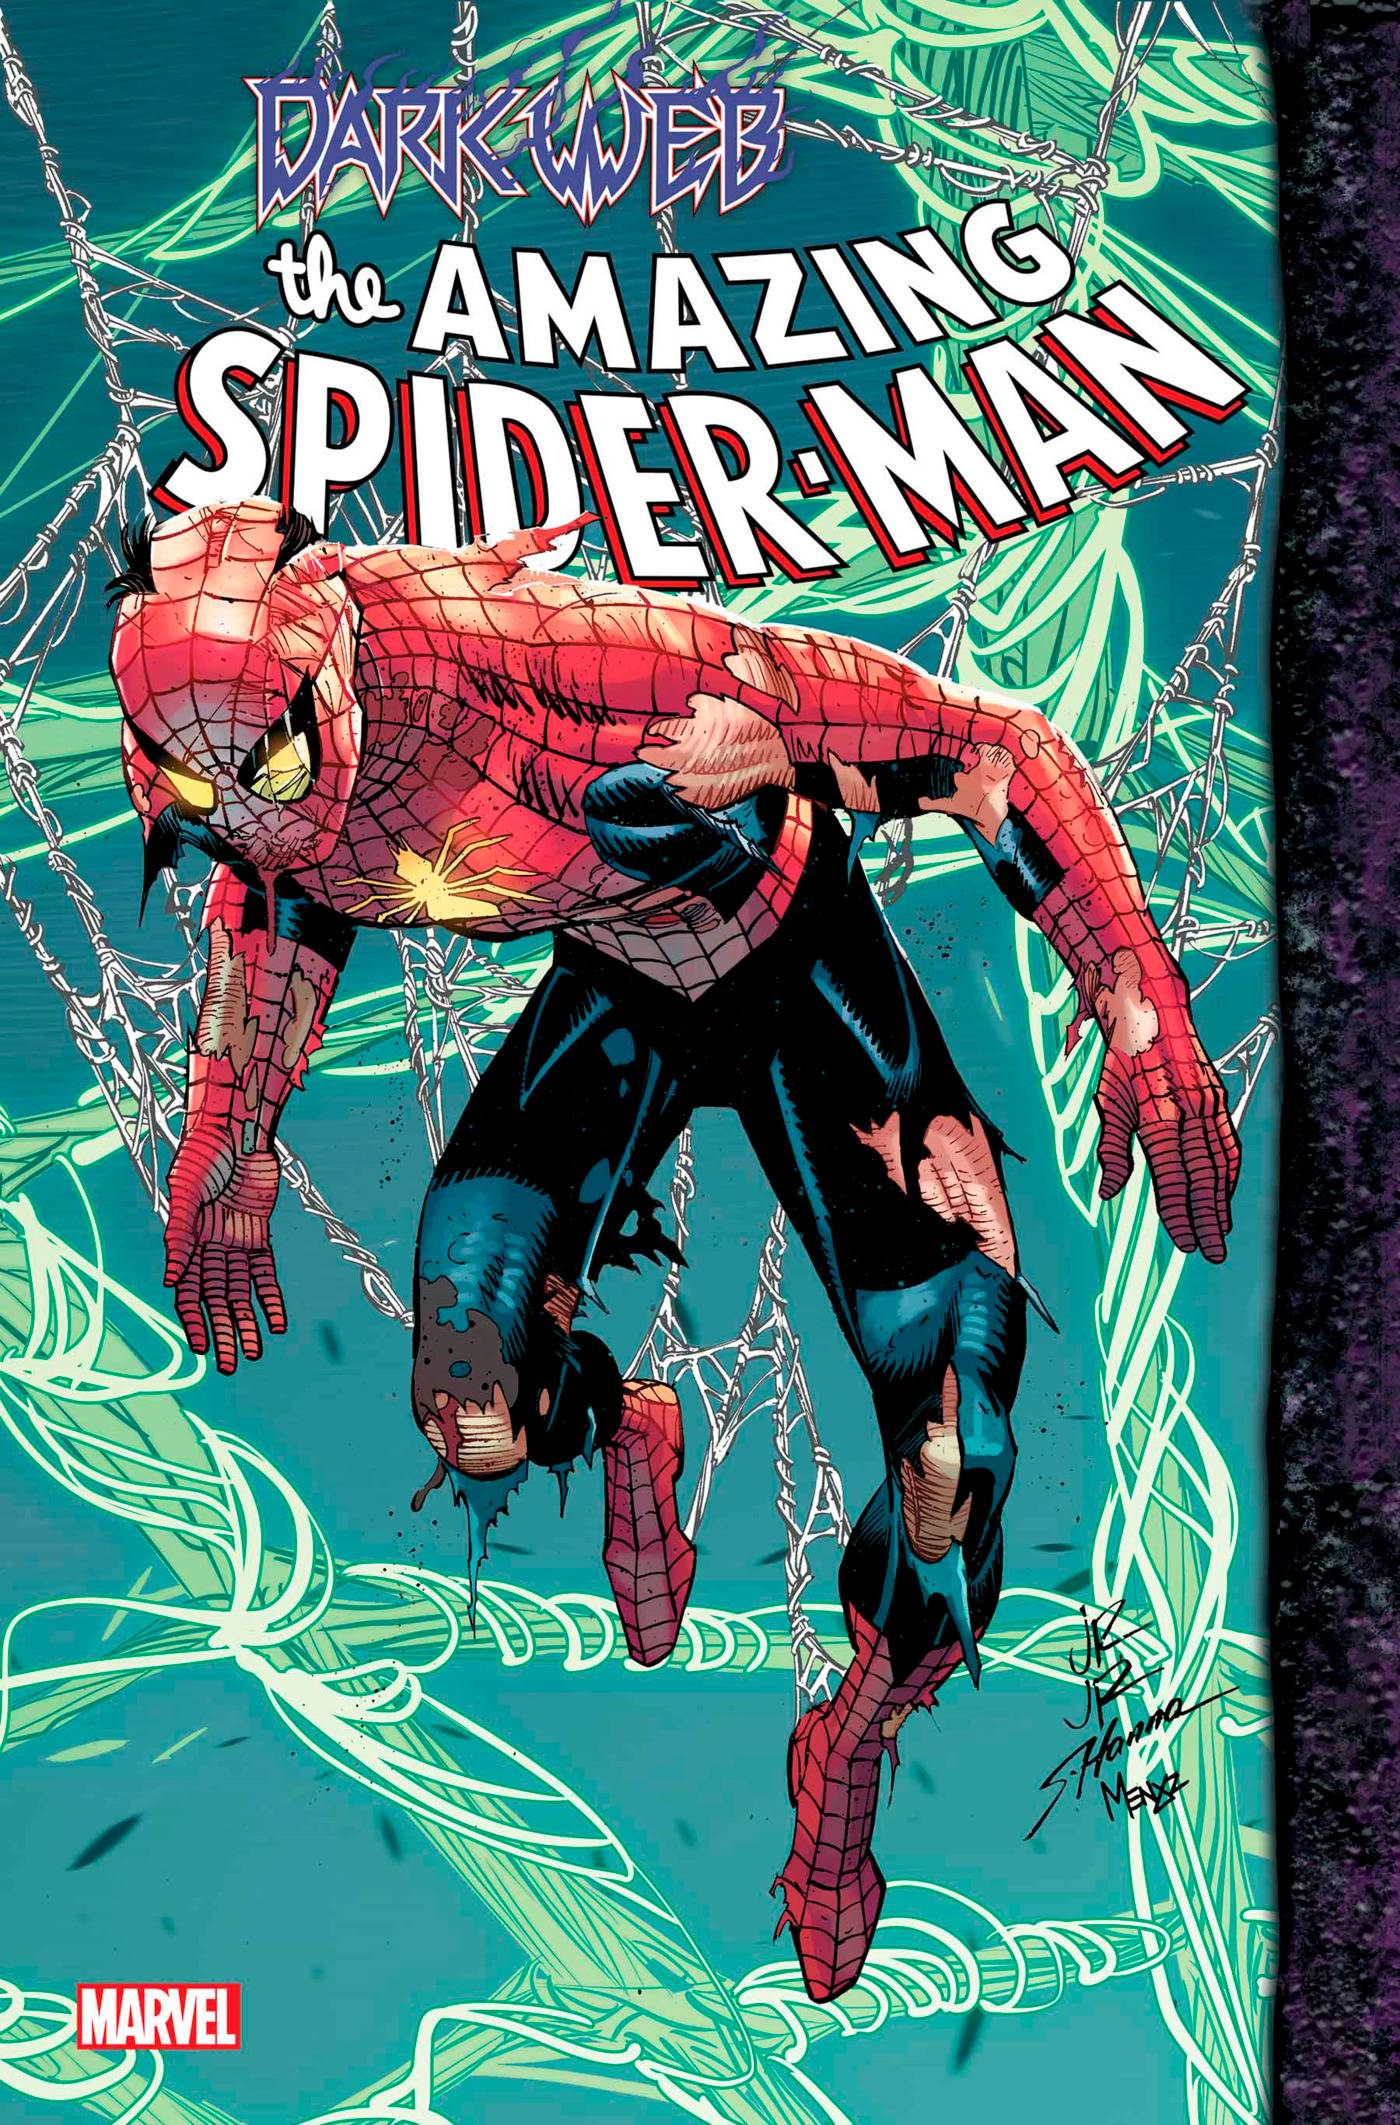 The Amazing Spiderman Magazine Subscription